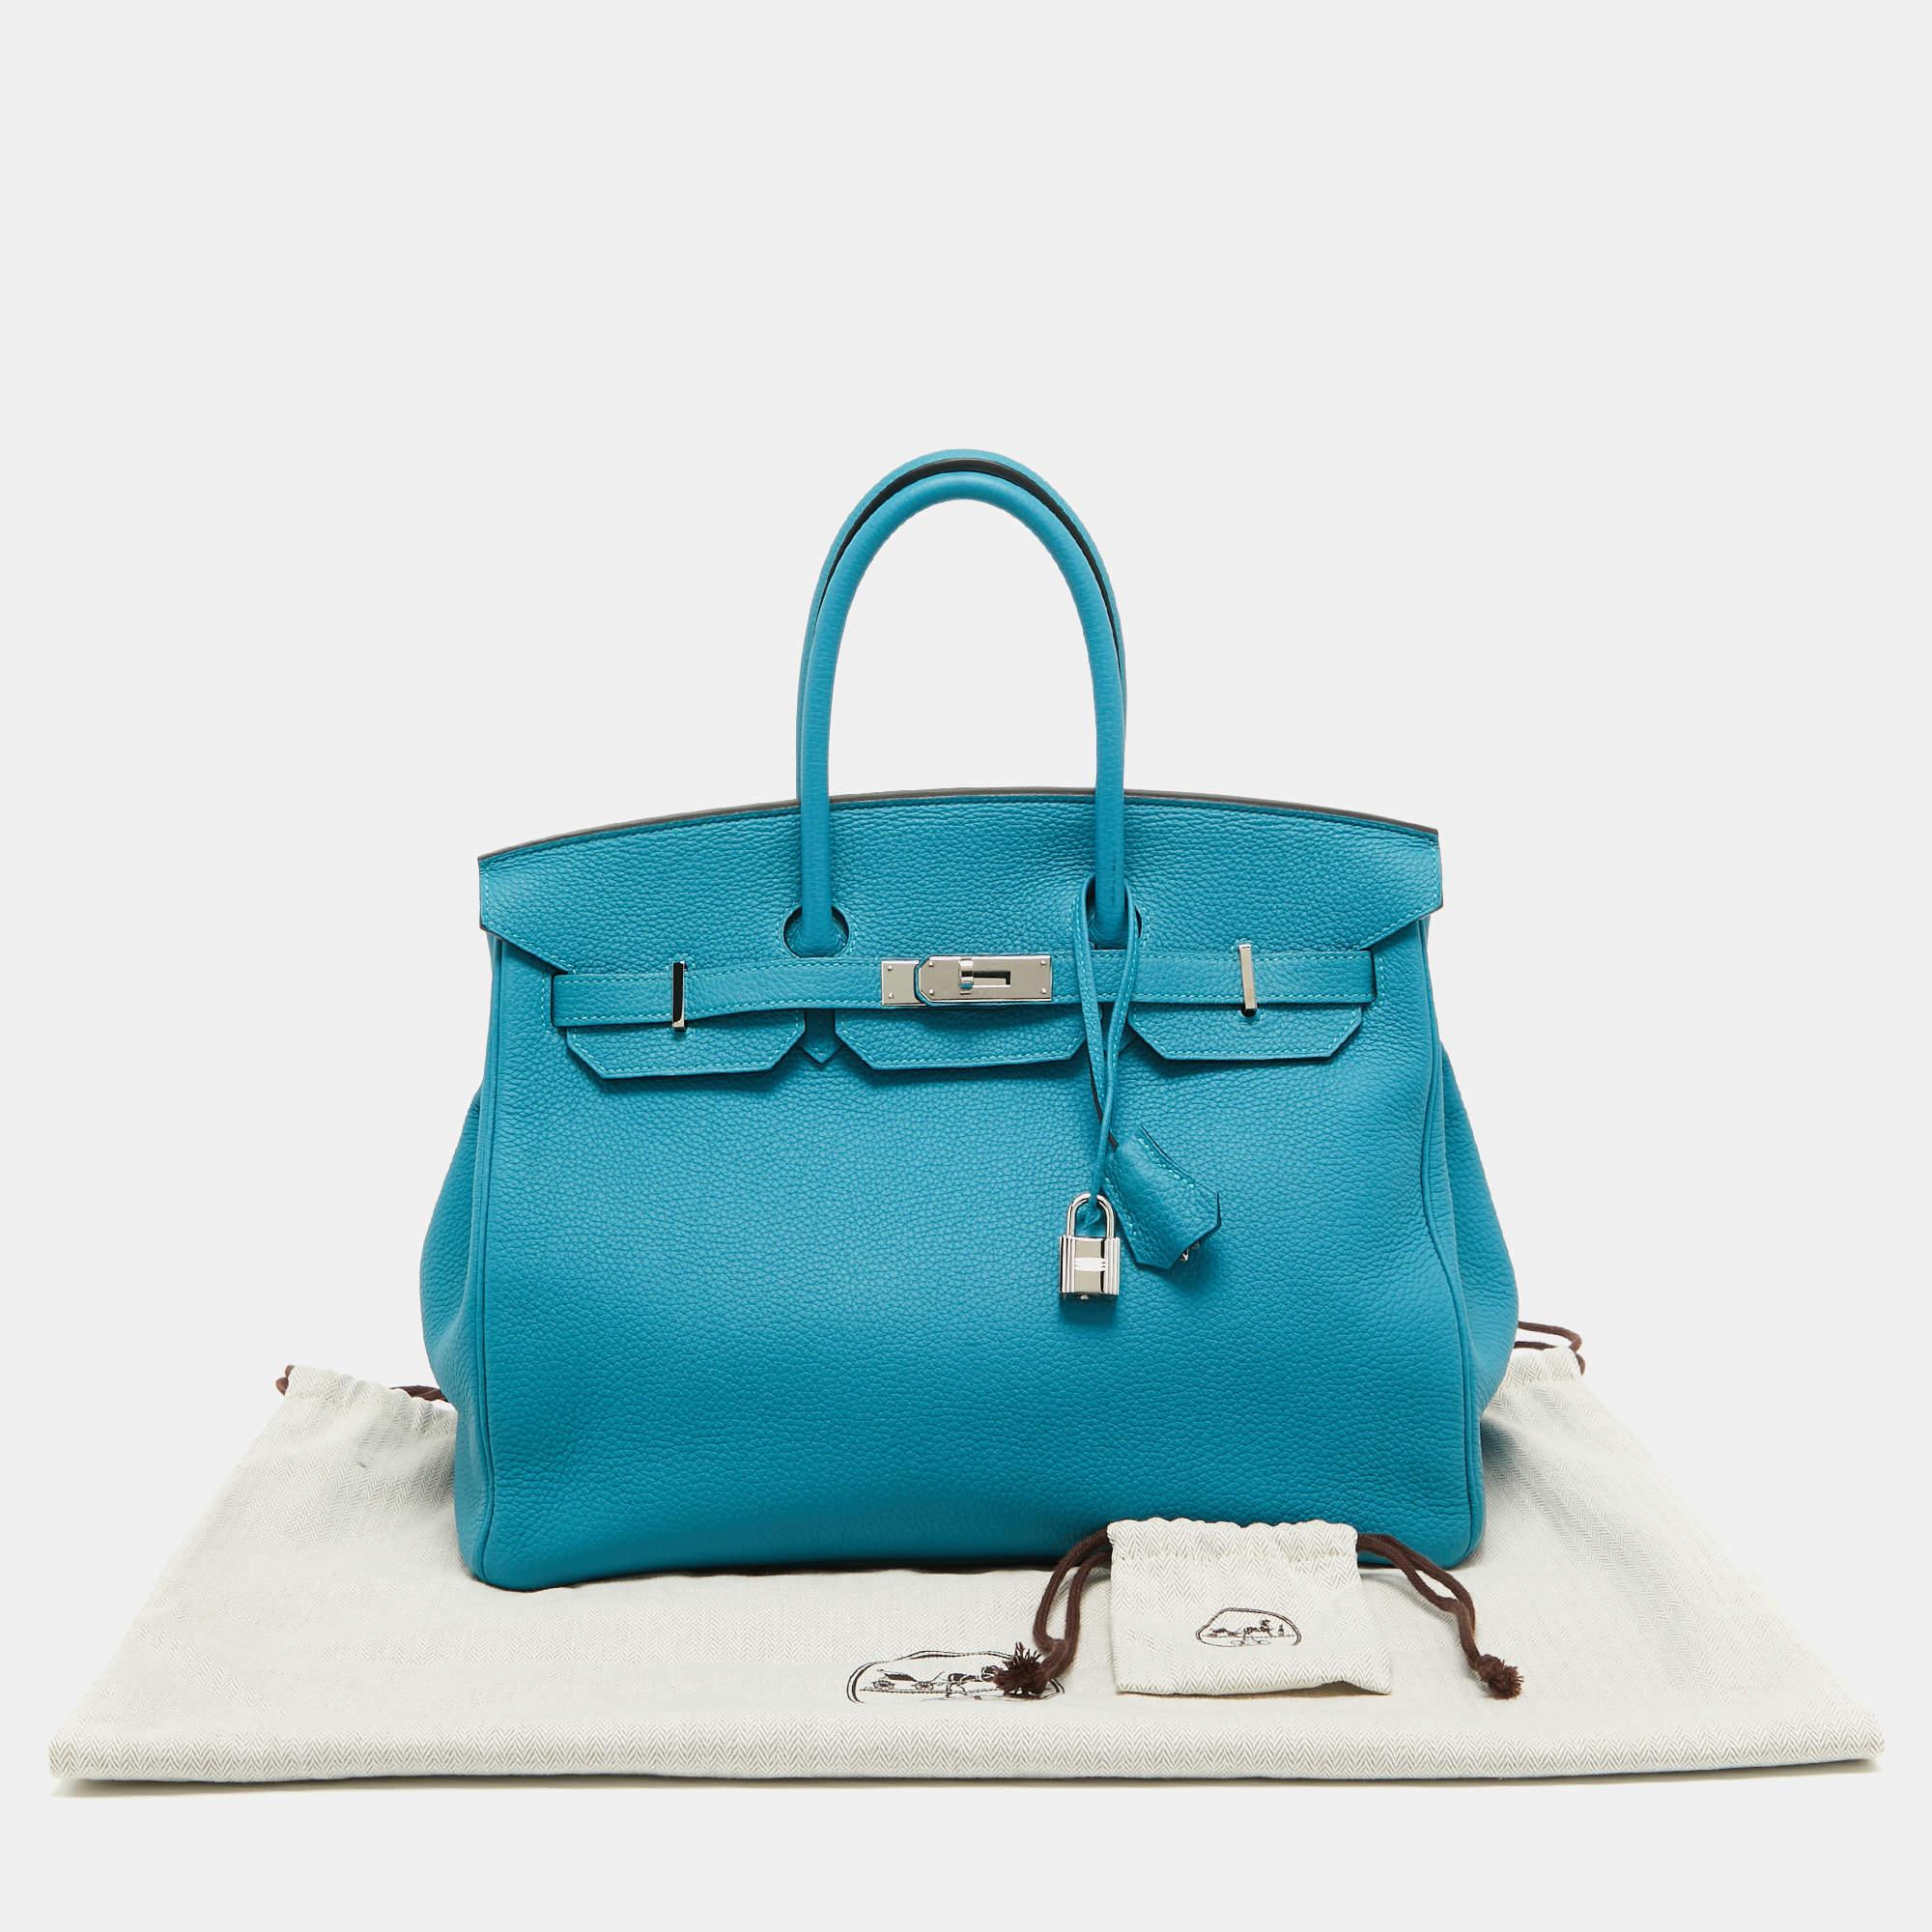 Hermes Turquoise Blue Togo Leather Palladium Finish Birkin 35 Bag For Sale 12